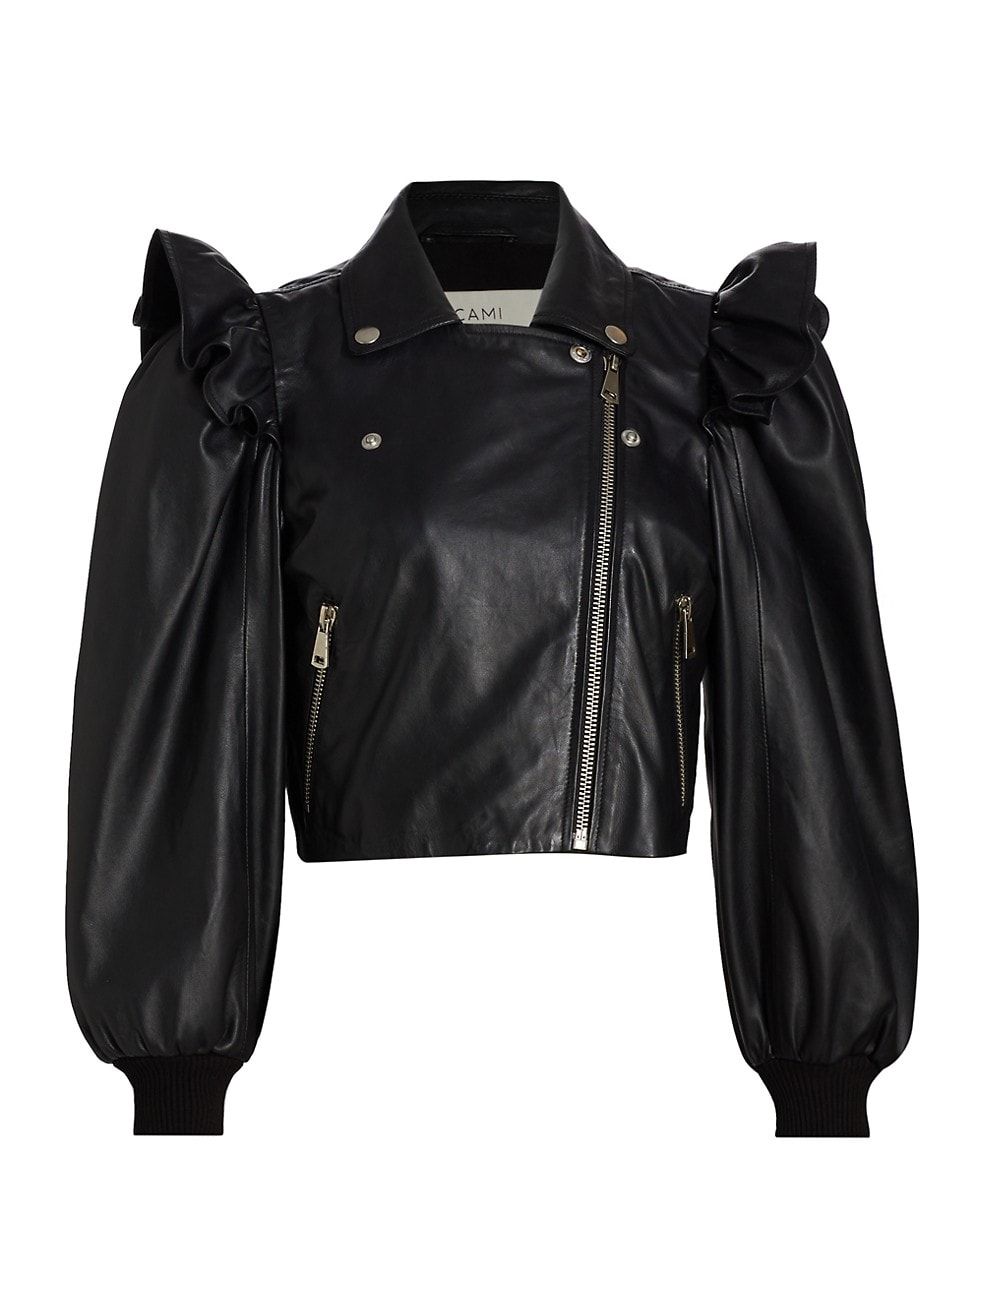 Cami NYC Beta Puff-Sleeve Leather Jacket | Saks Fifth Avenue